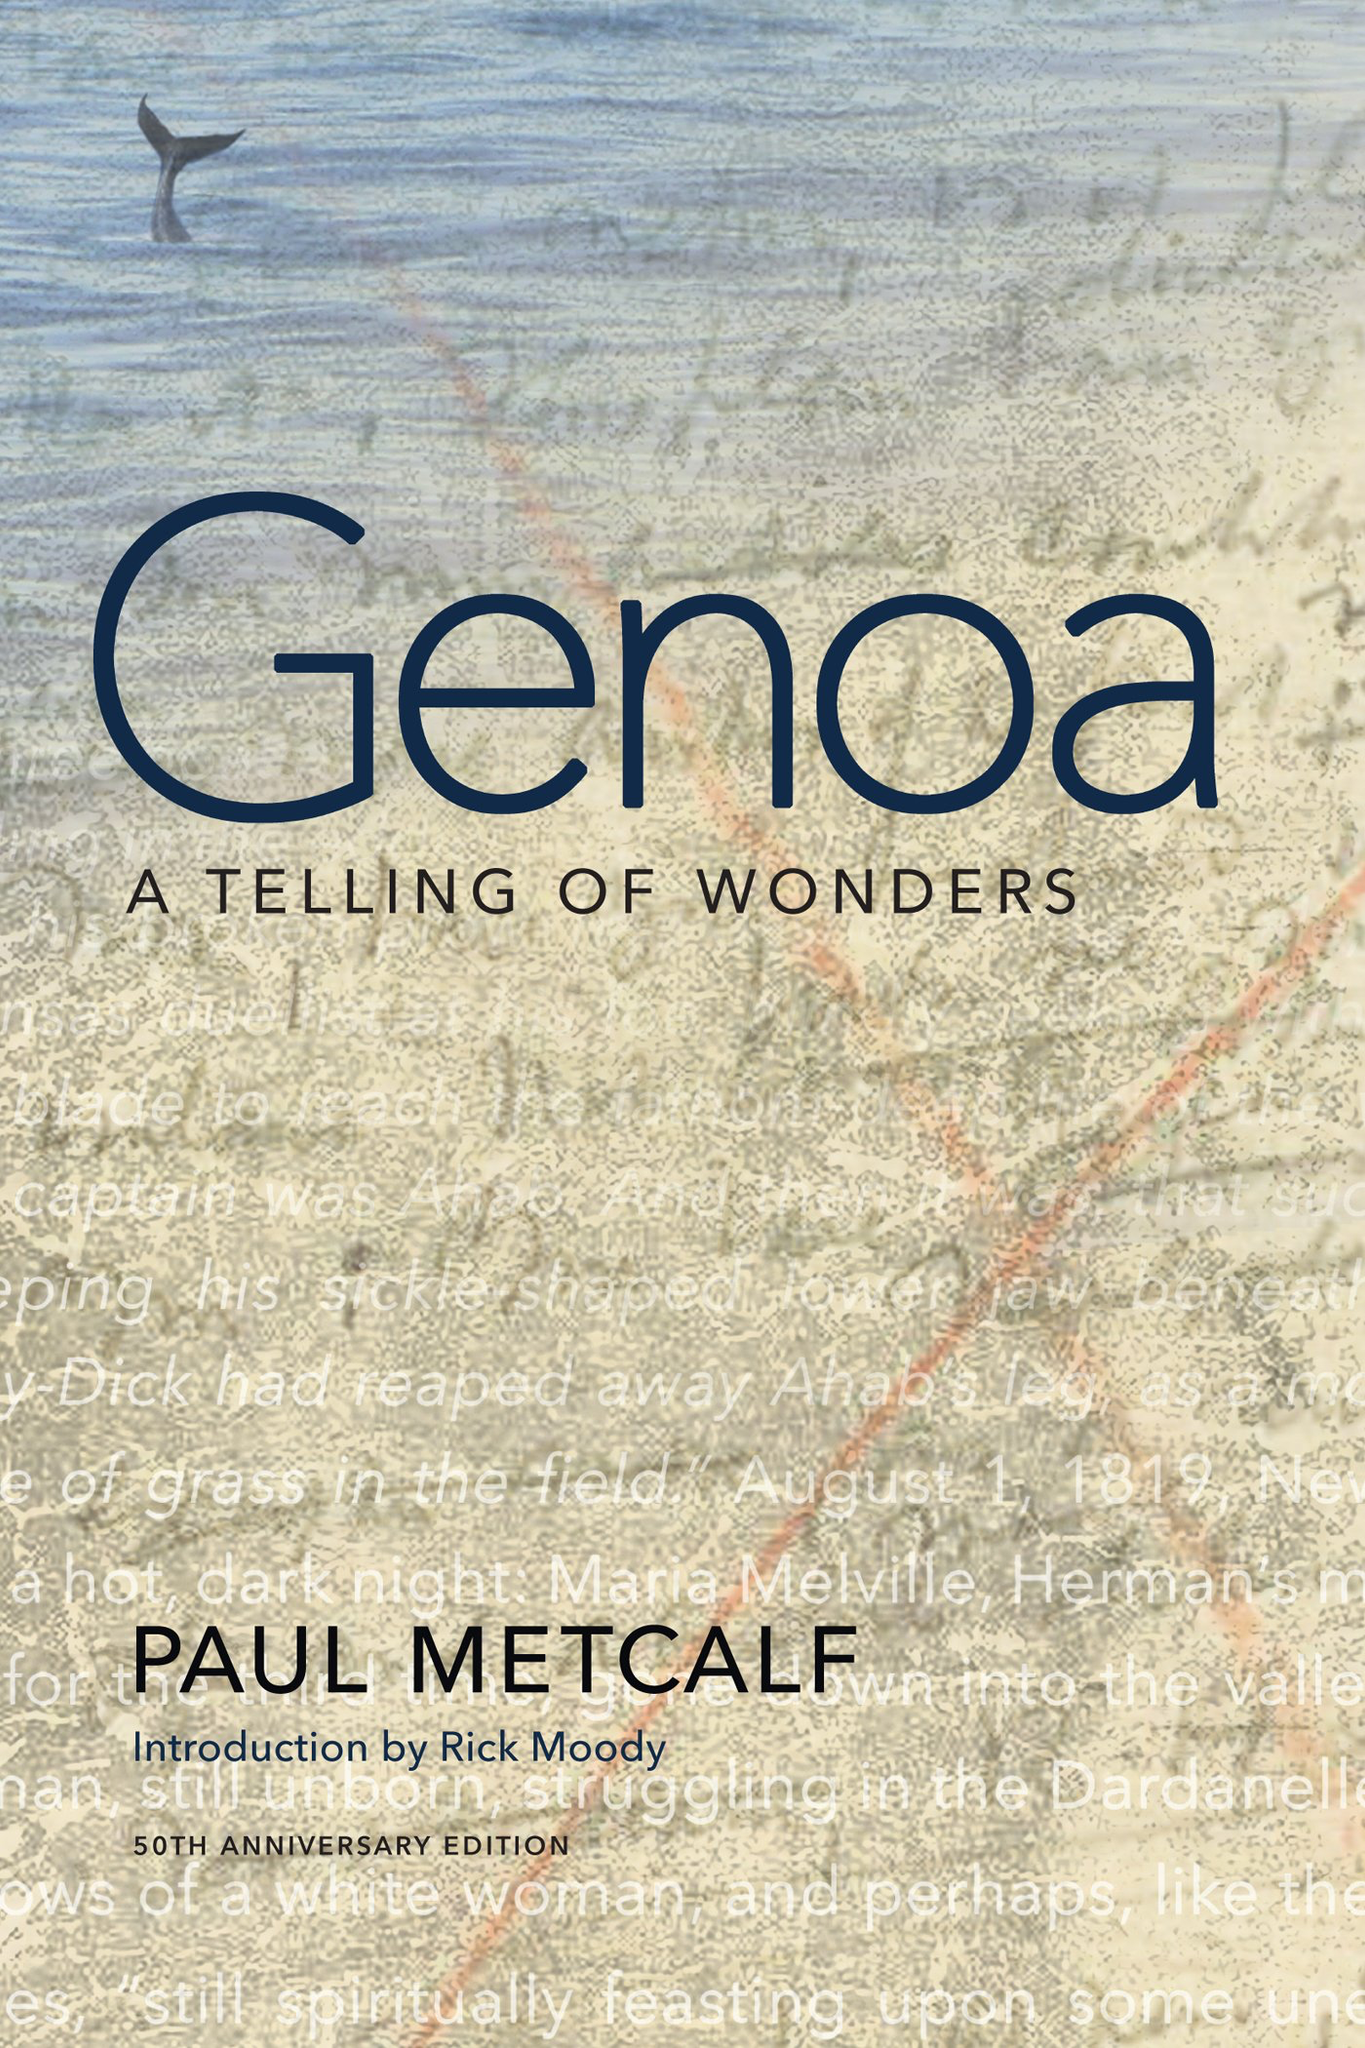 Genoa: A Telling of Wonders